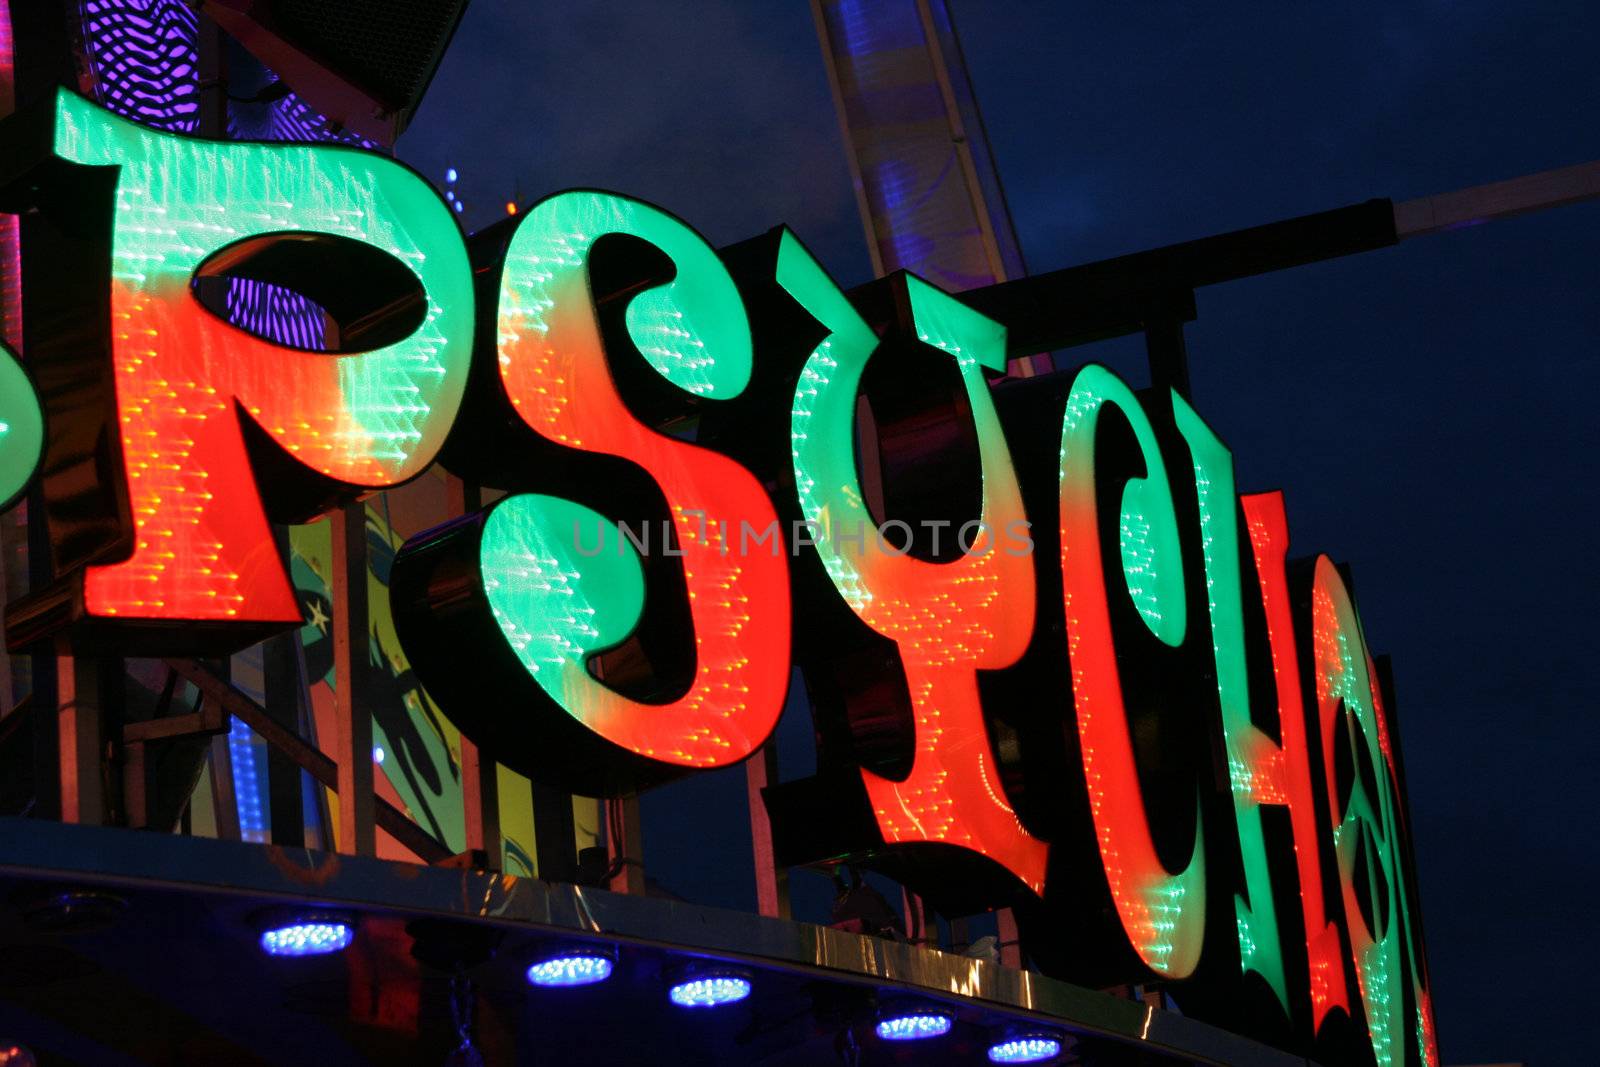 Neon fun fair attraction advertising at night